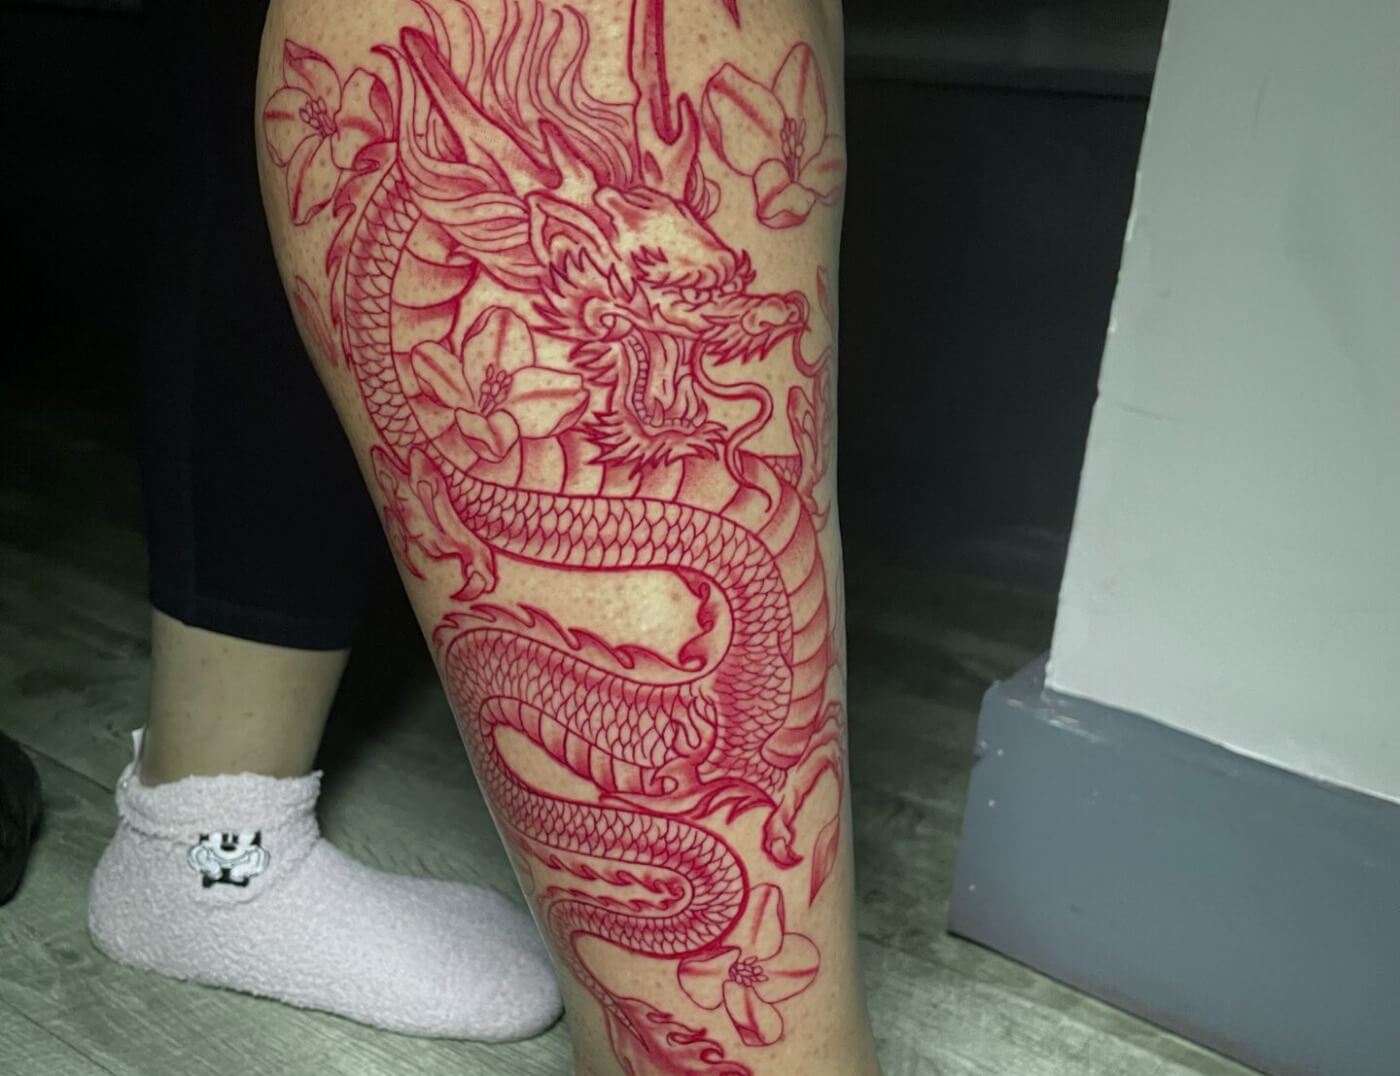 Bluenose pit and German shepherd in a paw print tattoo idea | TattoosAI